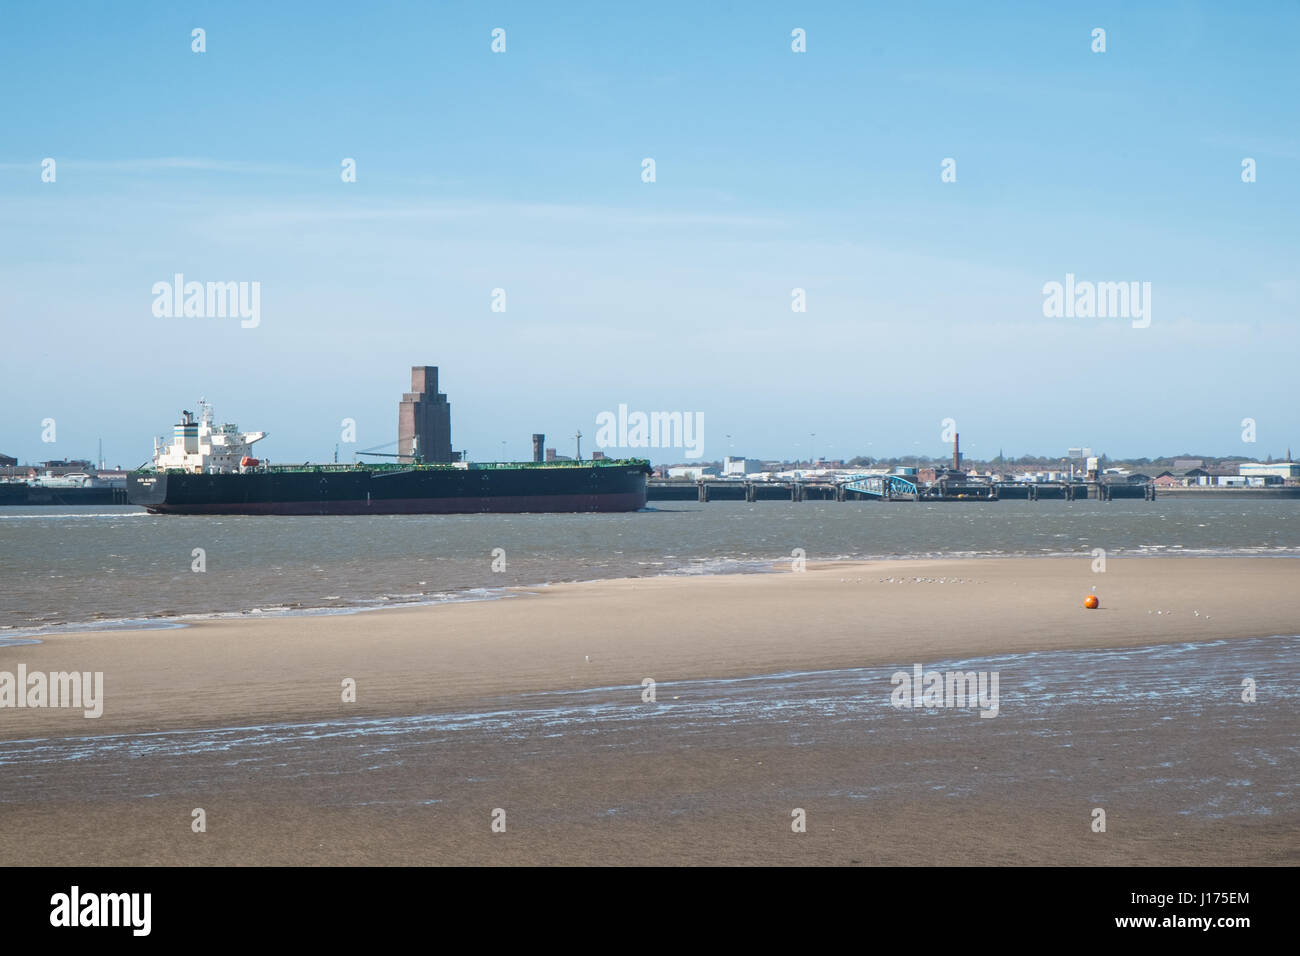 Fiume Mersey,bassa marea,tanker,nave,barene,Liverpool, Merseyside,l'Inghilterra,Unesco,città dichiarata Patrimonio Mondiale,città,Nord,Nord,l'Inghilterra,inglese,UK. Foto Stock